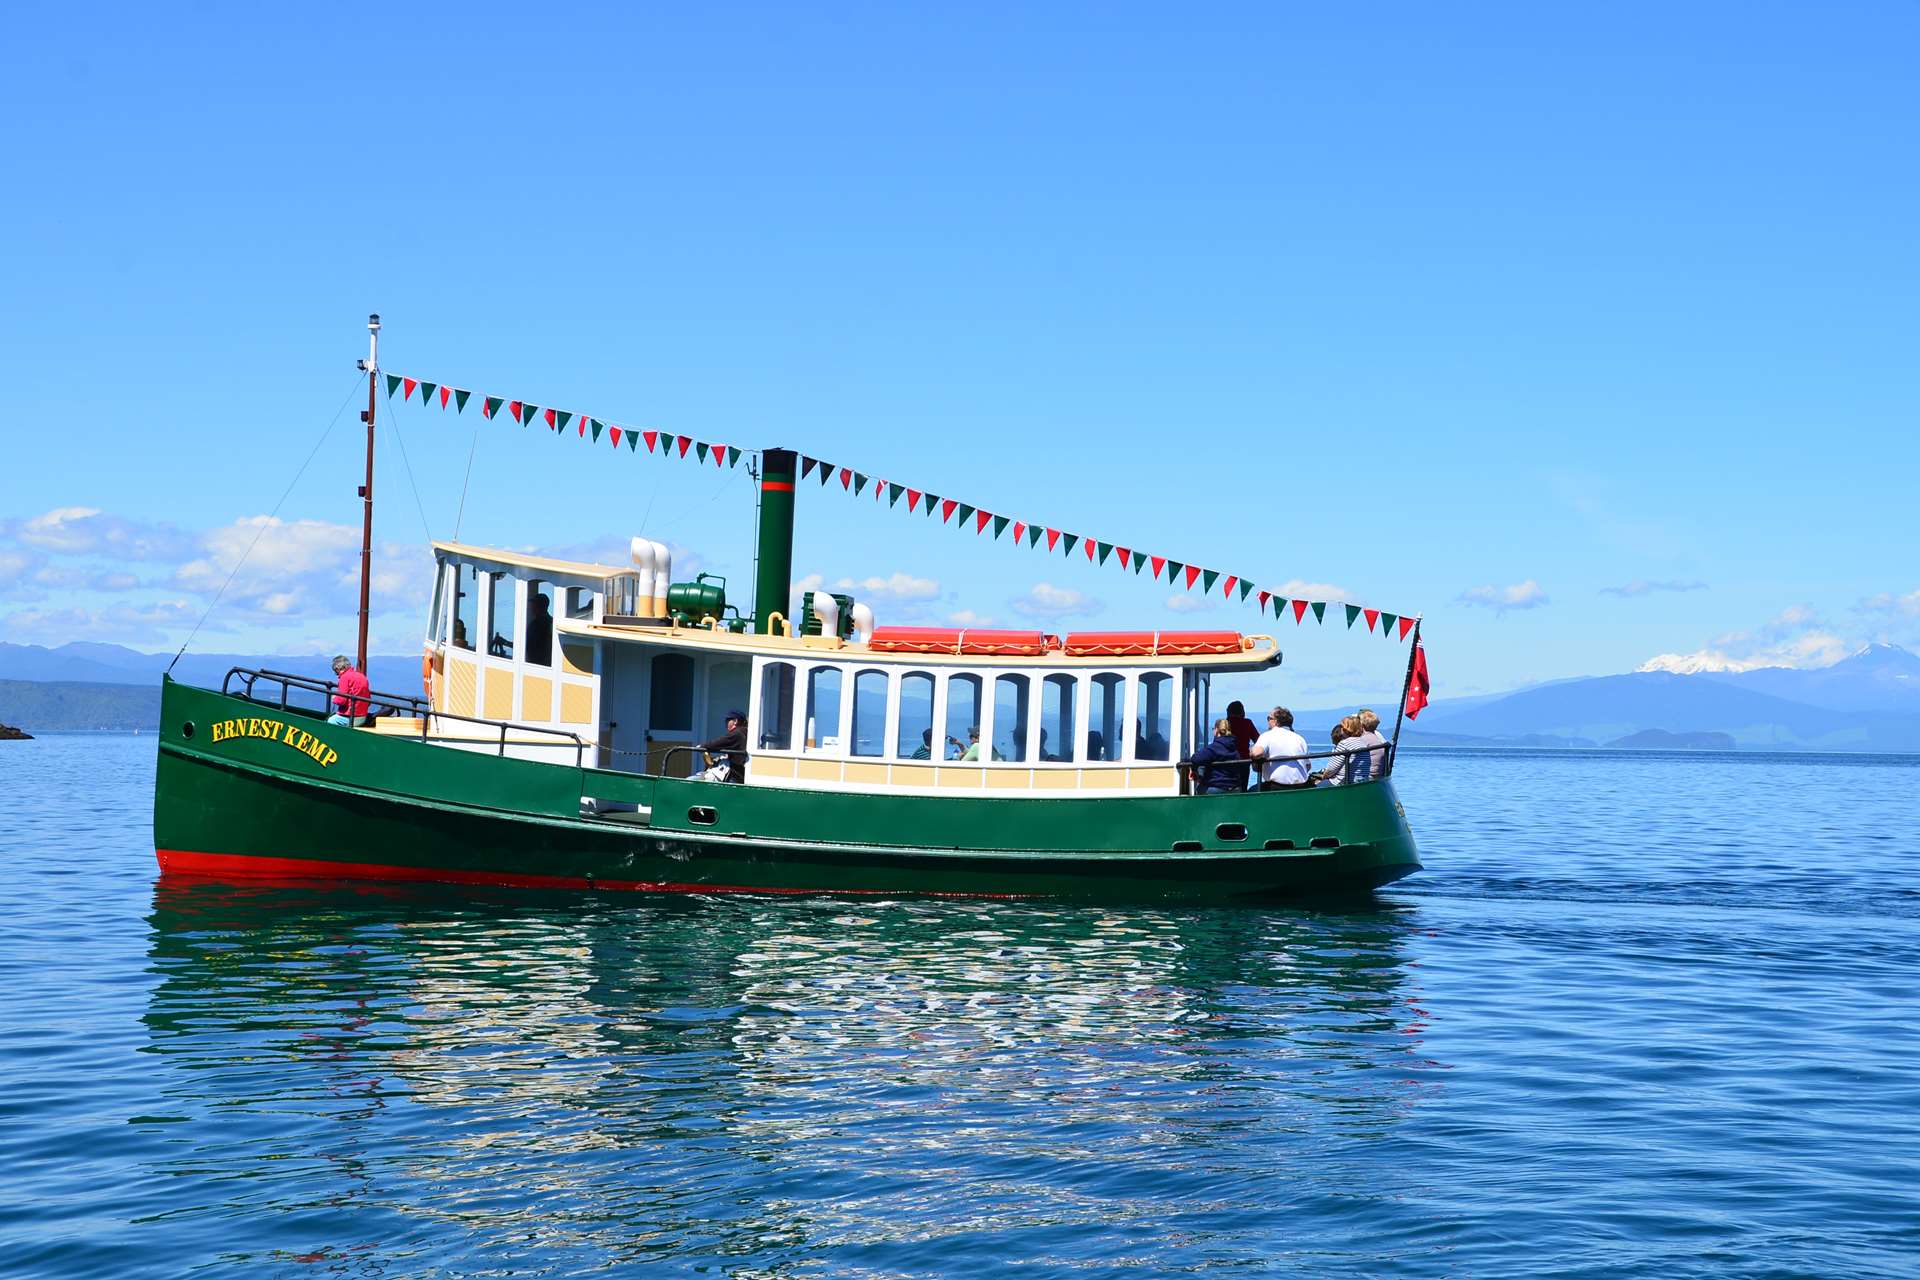 boat cruise lake taupo